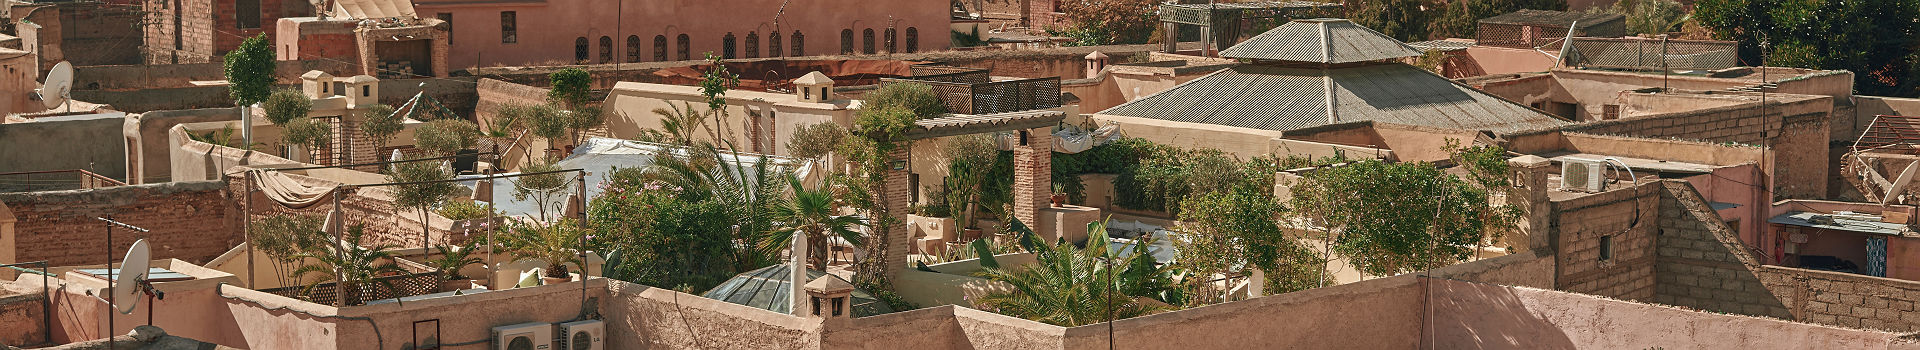 Ville de Marrakech - Maroc